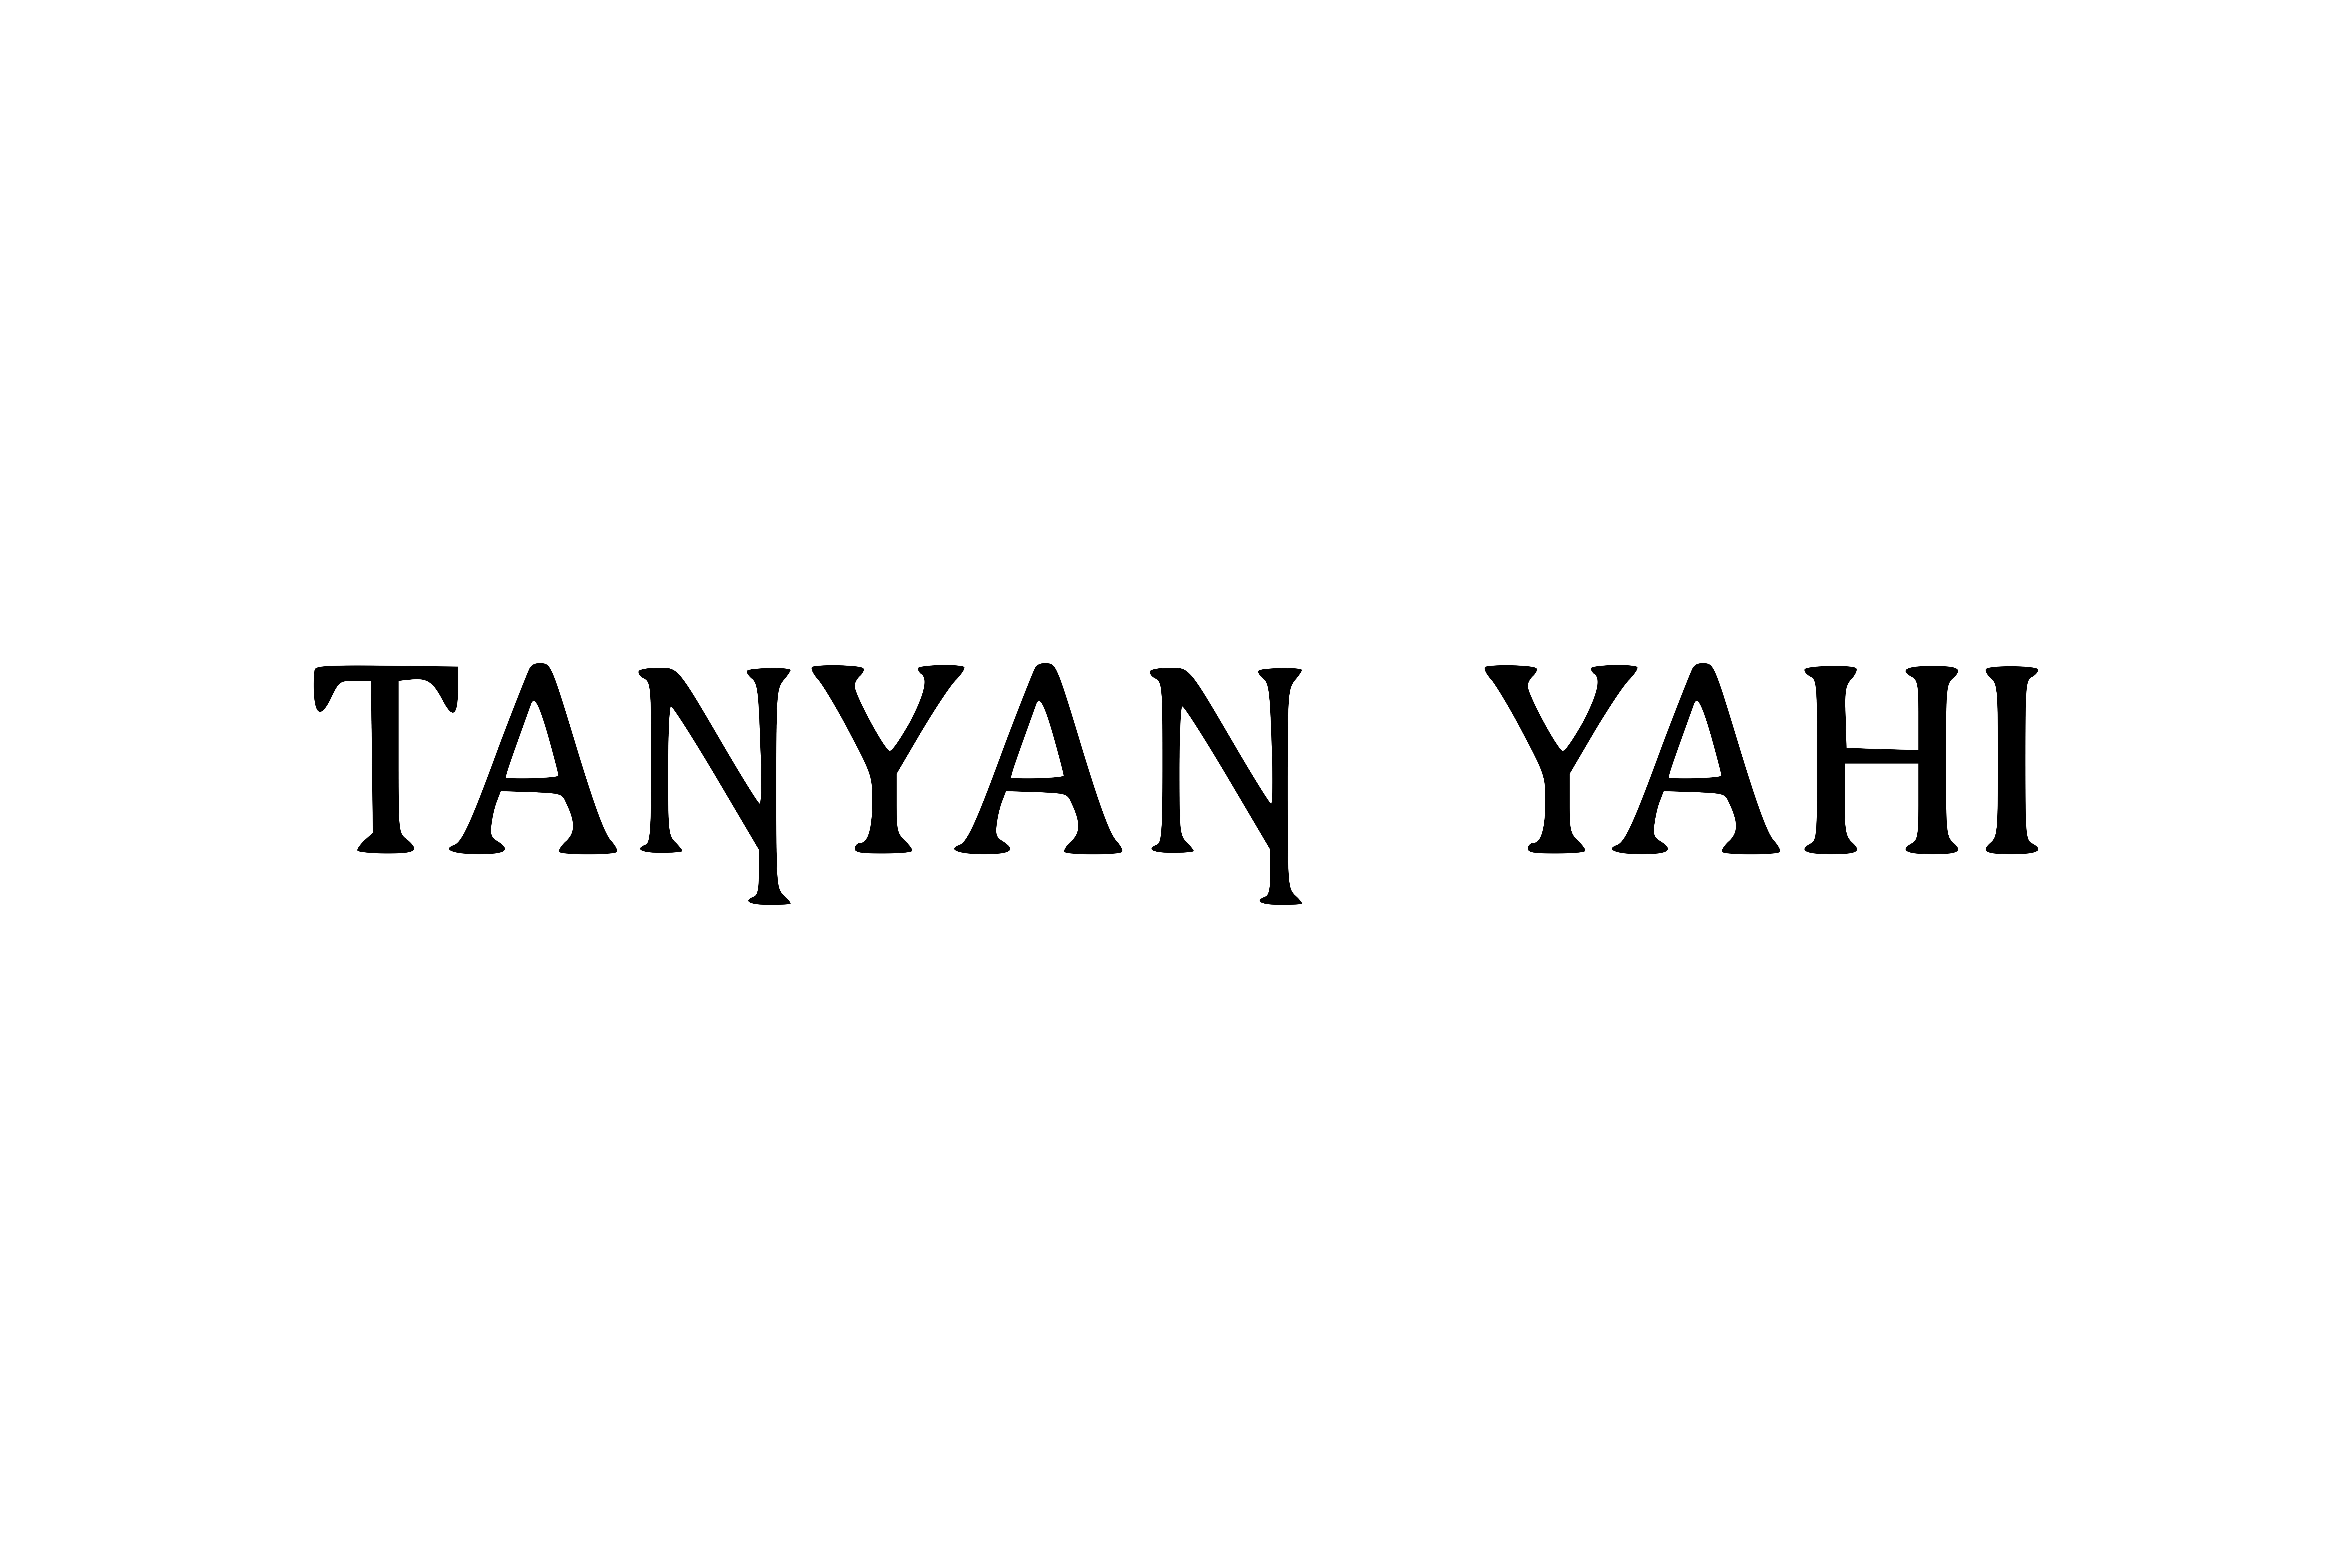 Tanyan Yahi-Welcome Sidewalk Stamp